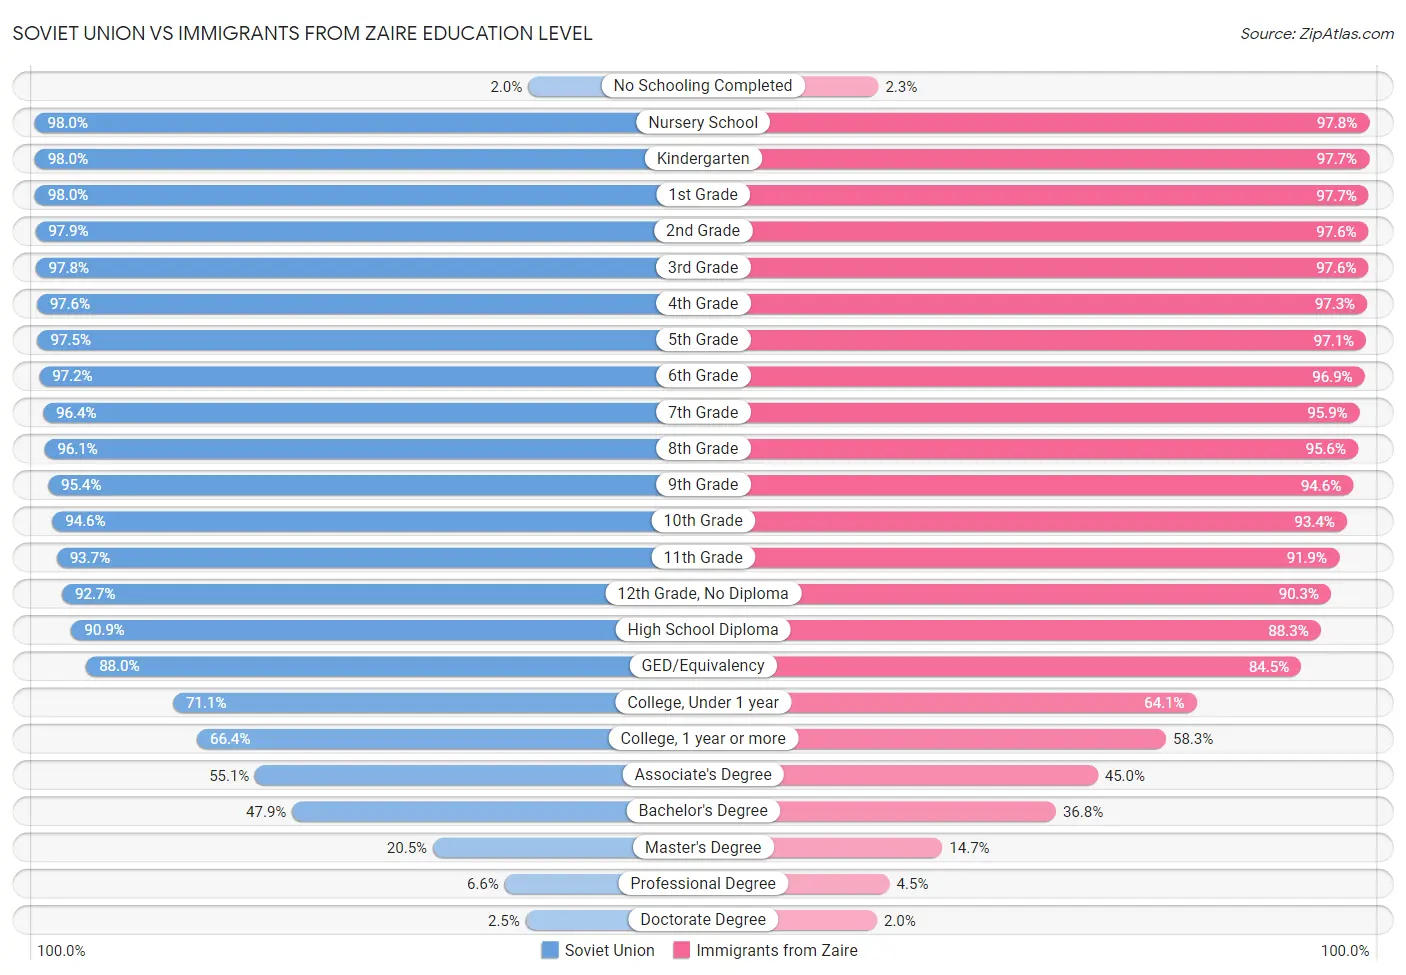 Soviet Union vs Immigrants from Zaire Education Level